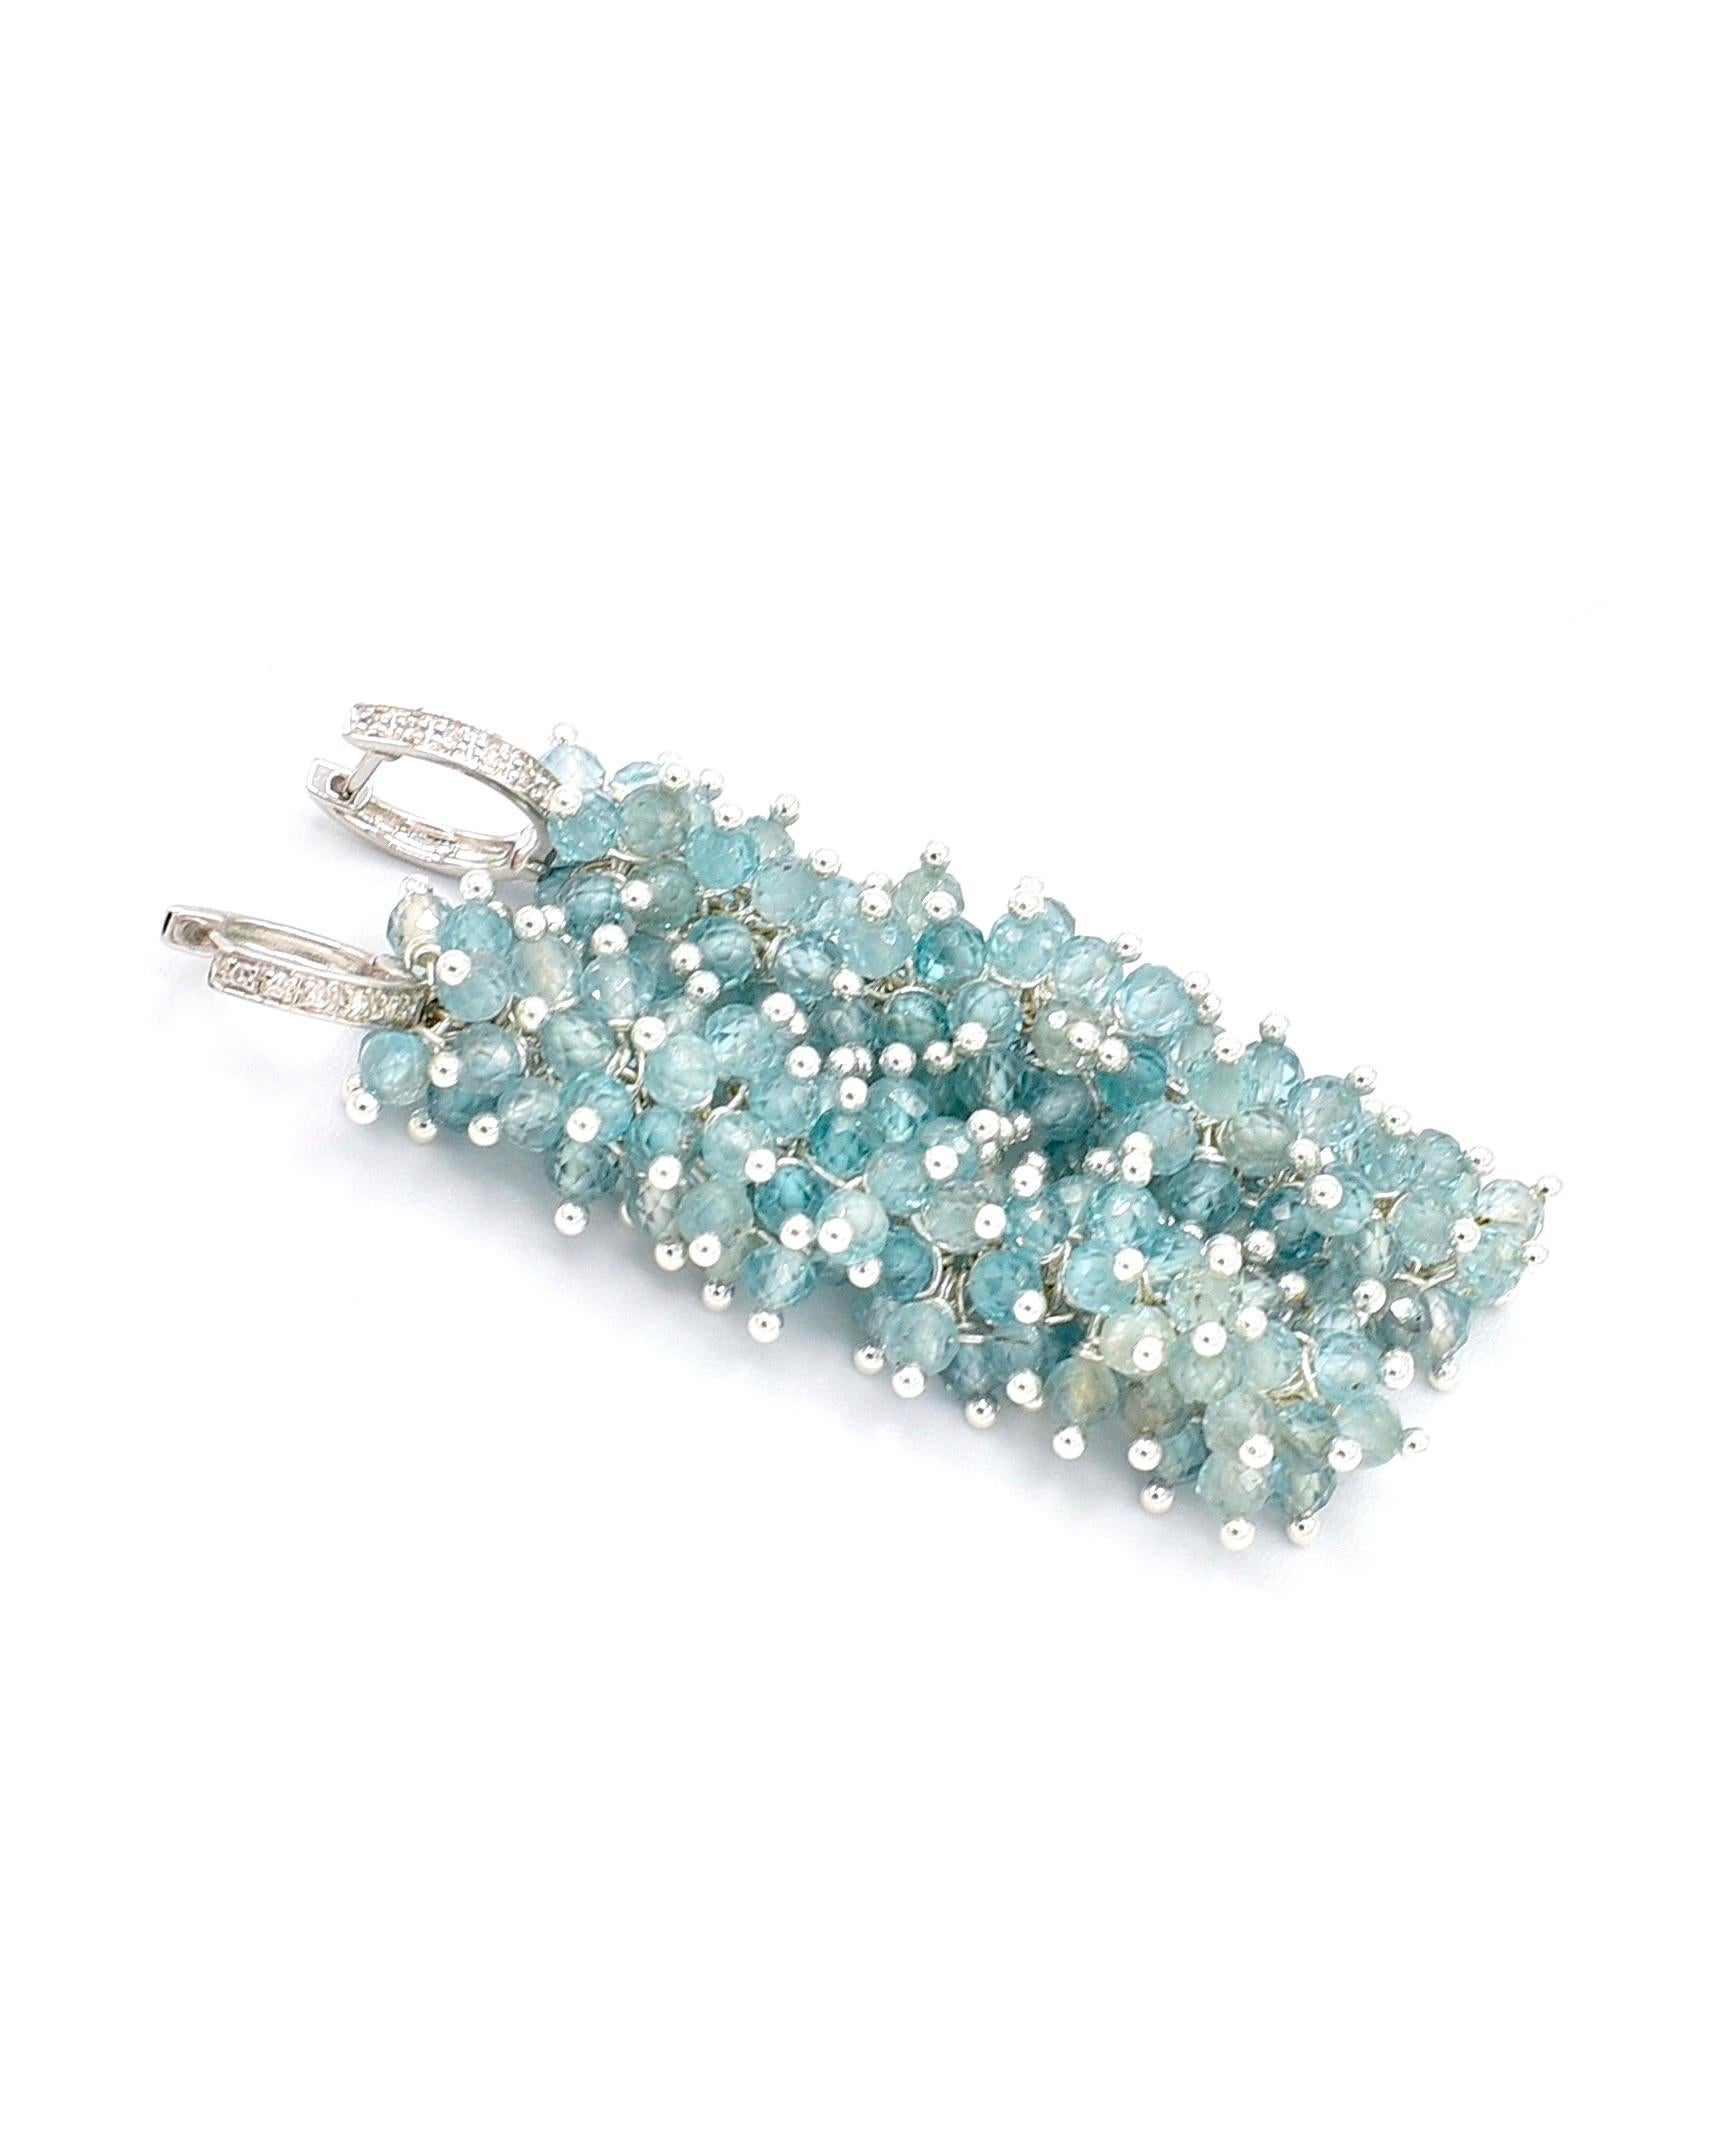 Women's 14k Solid White Gold Diamond Earrings with Blue Zircon Beads